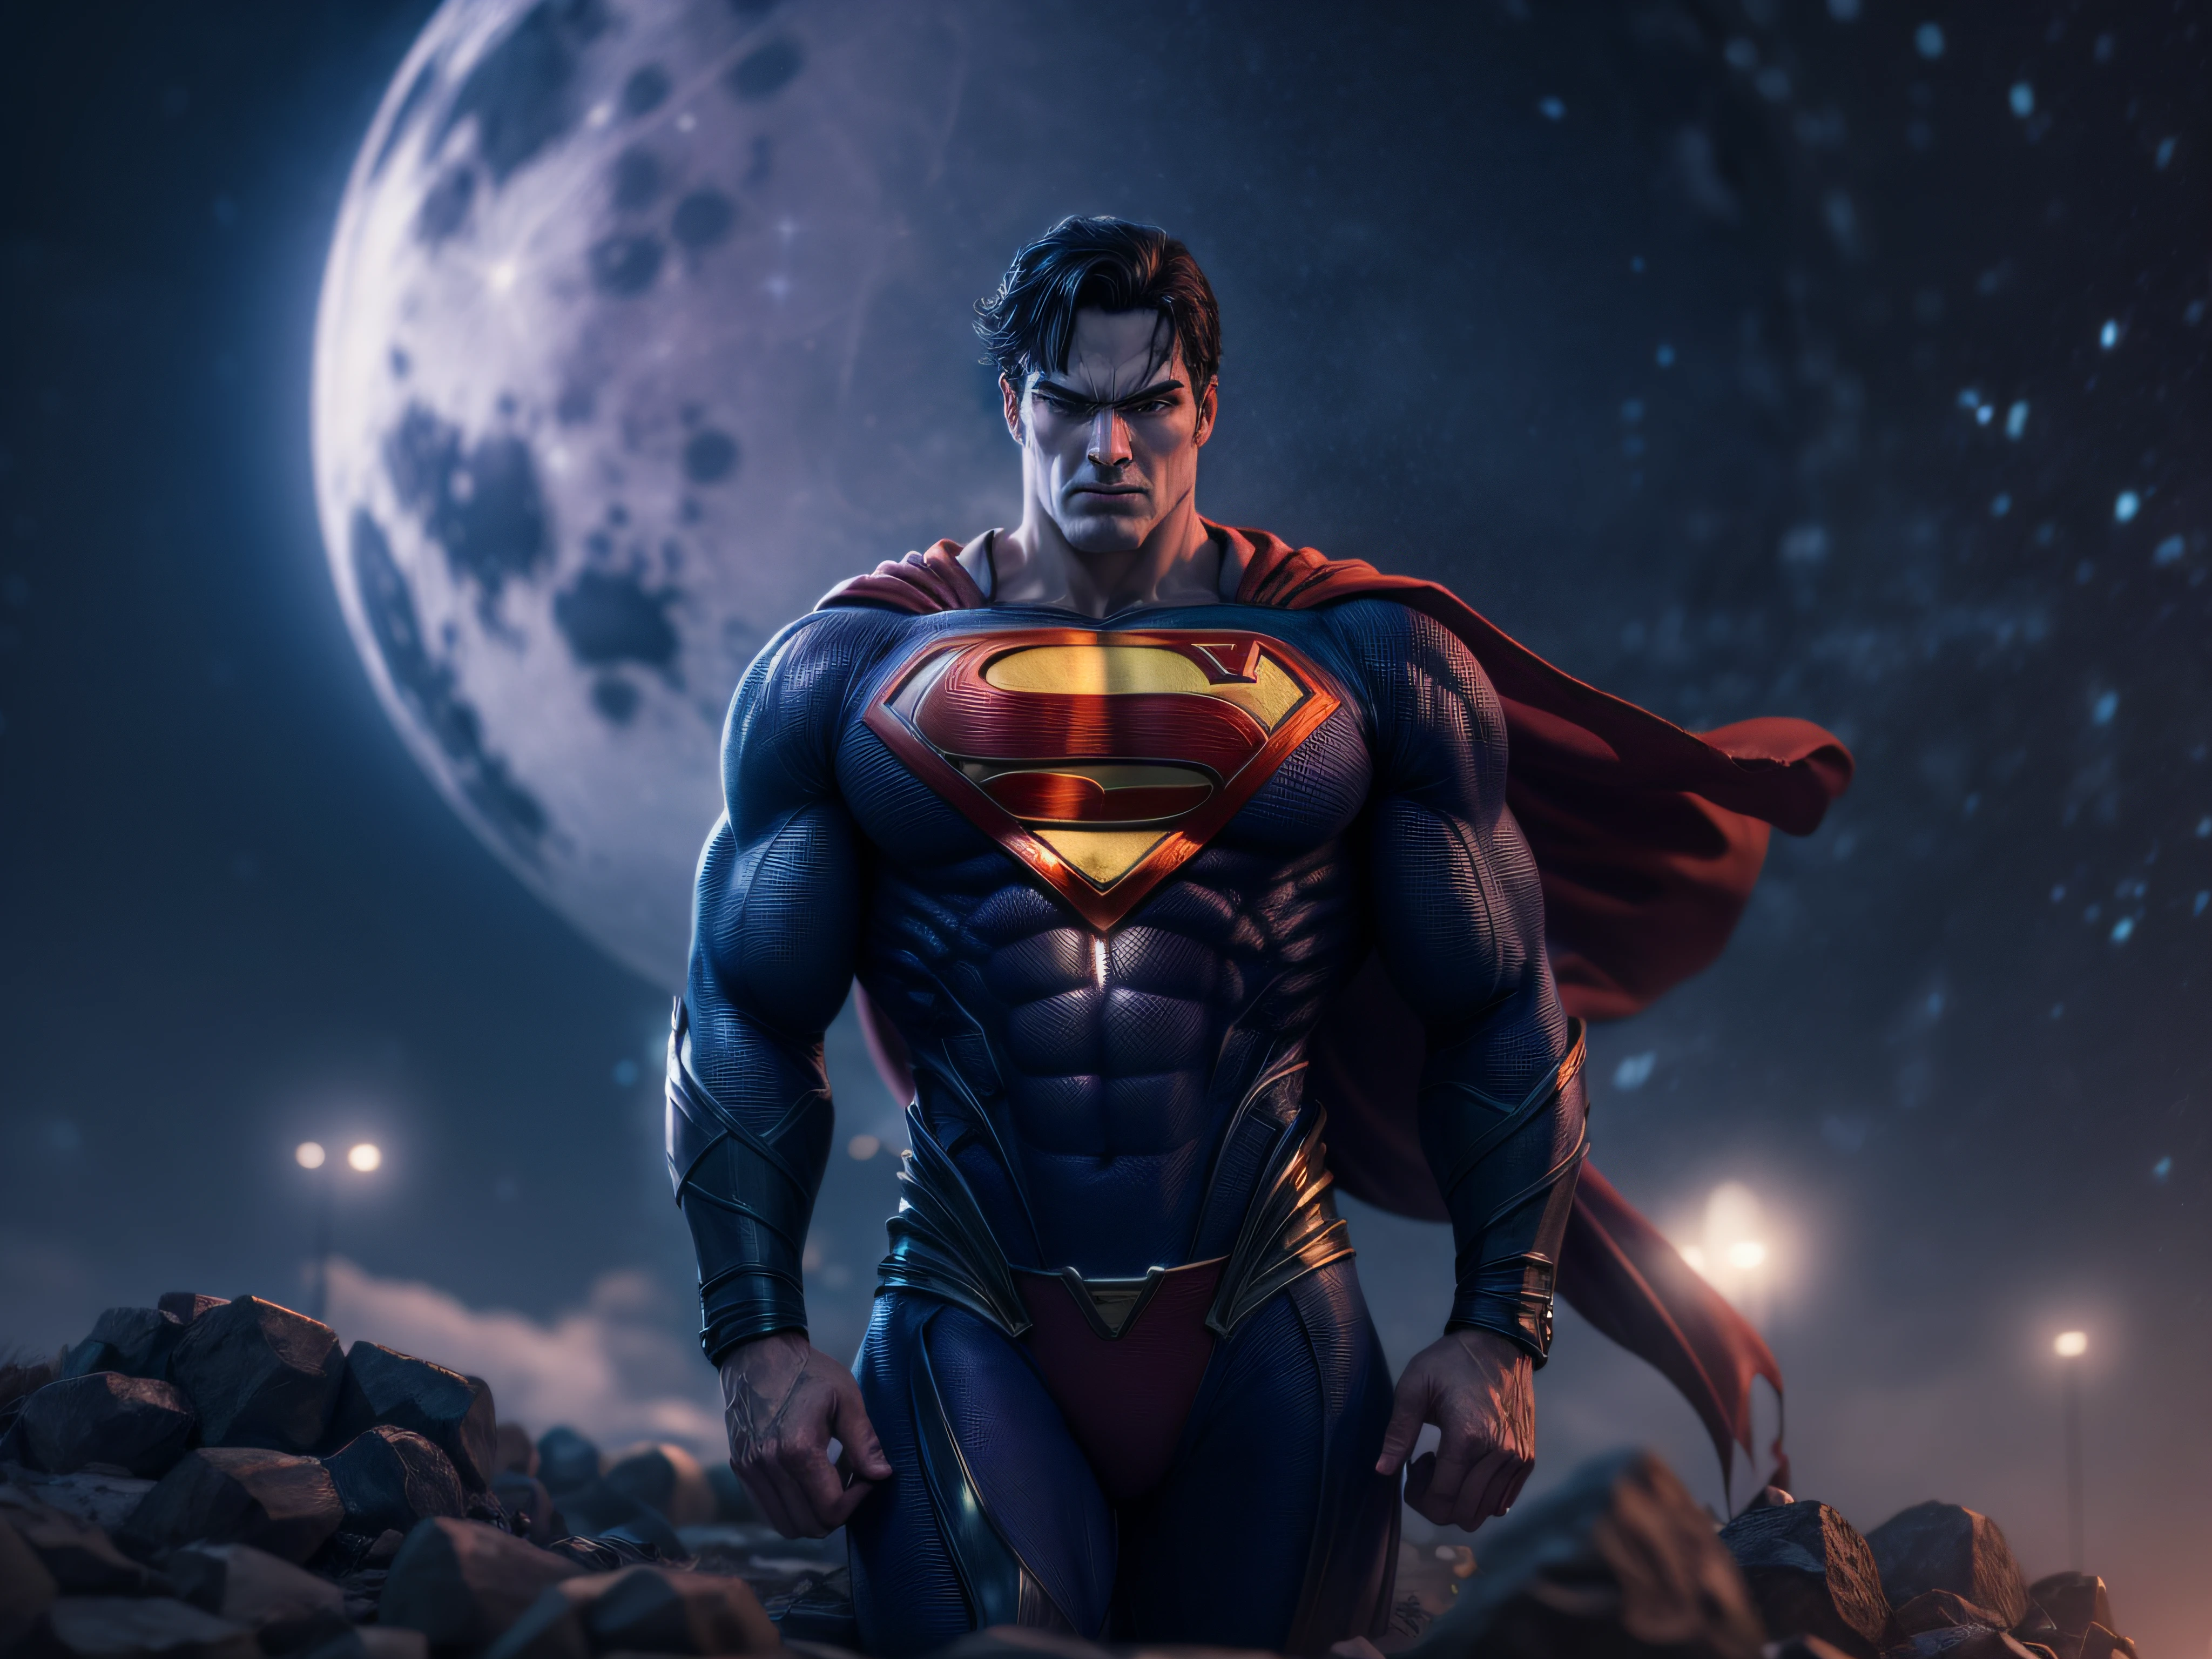 Close a powerful threat, Superman's imposing appearance, menacing stare, ricamente detalhado, Hiper realista, 3D-rendering, obra-prima, NVIDIA, RTX, ray-traced, Bokeh, Night sky with a huge and beautiful full moon, estrelas brilhando,